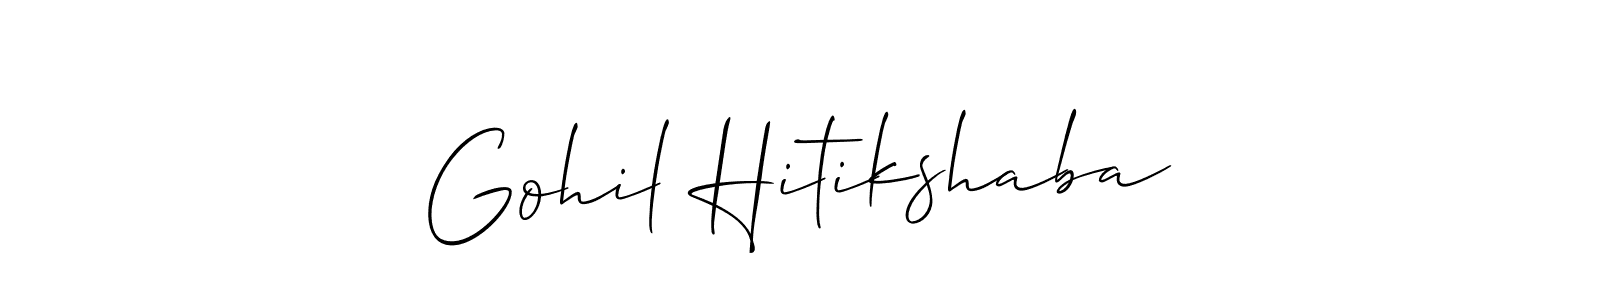 How to make Gohil Hitikshaba signature? Allison_Script is a professional autograph style. Create handwritten signature for Gohil Hitikshaba name. Gohil Hitikshaba signature style 2 images and pictures png